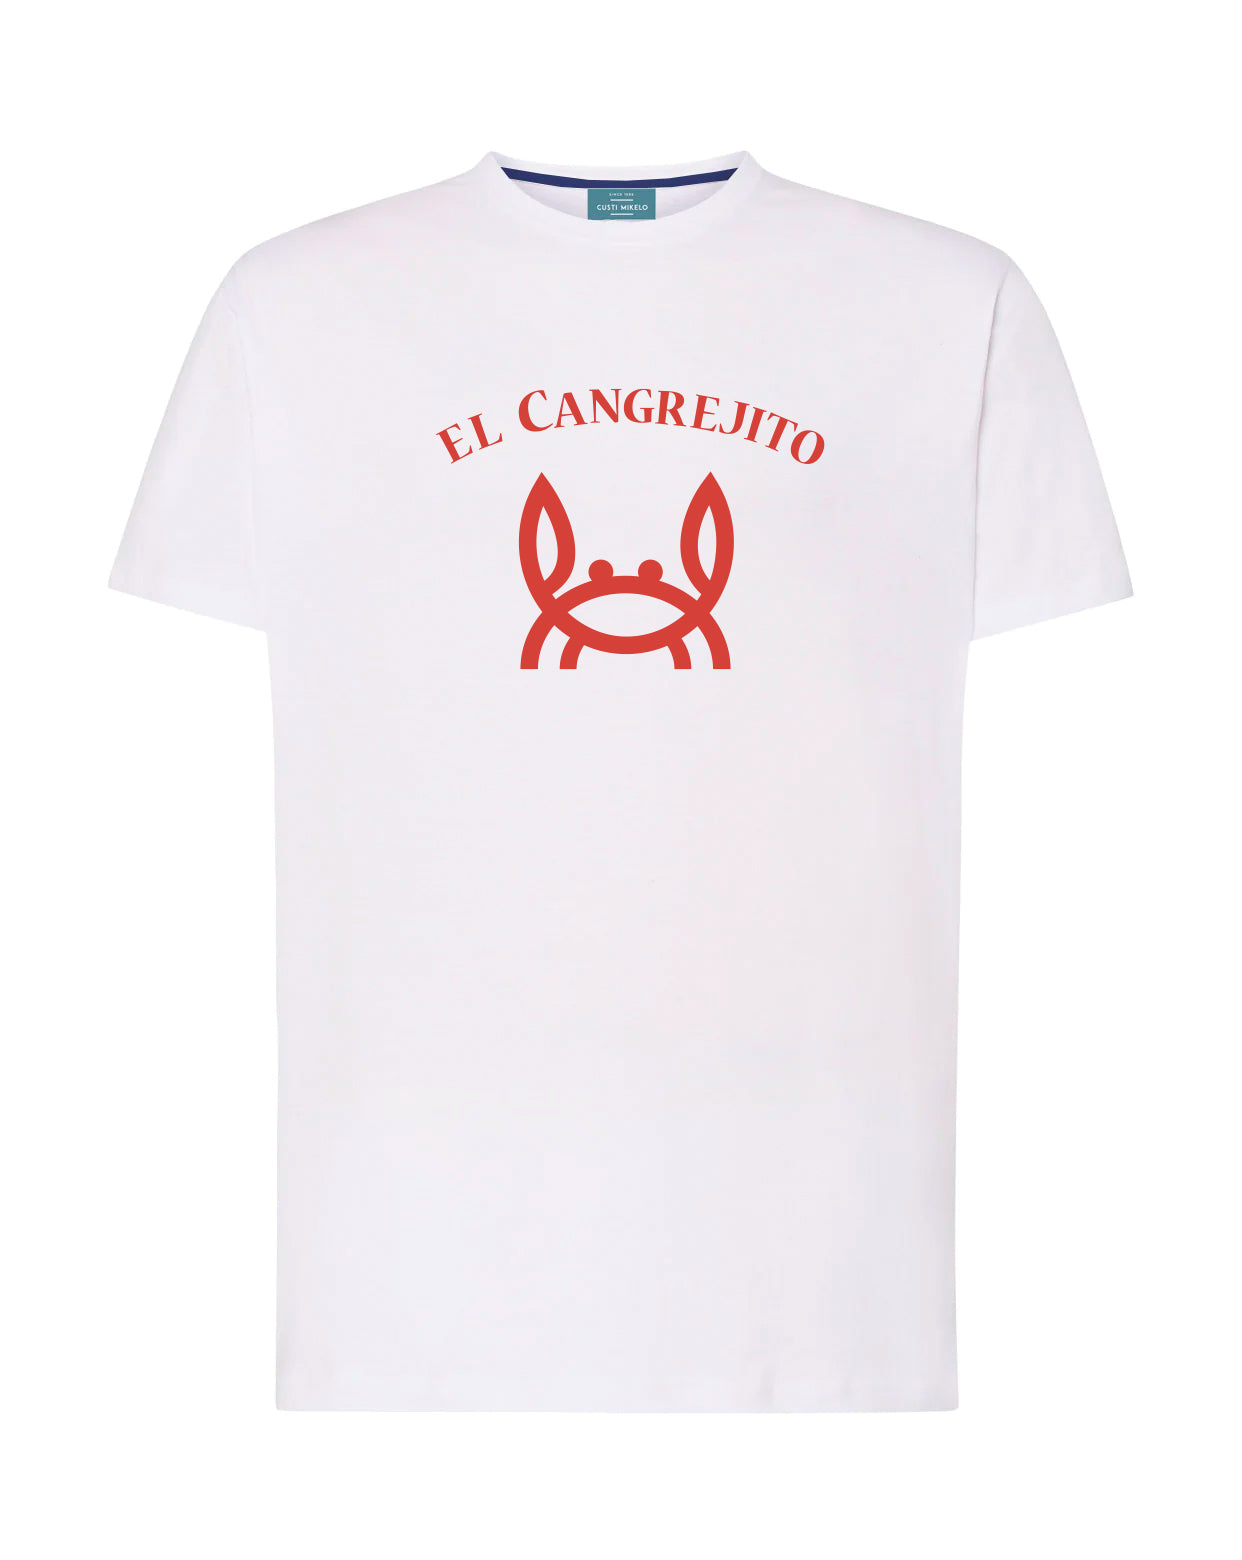 Camiseta cangrejito blanco rojo